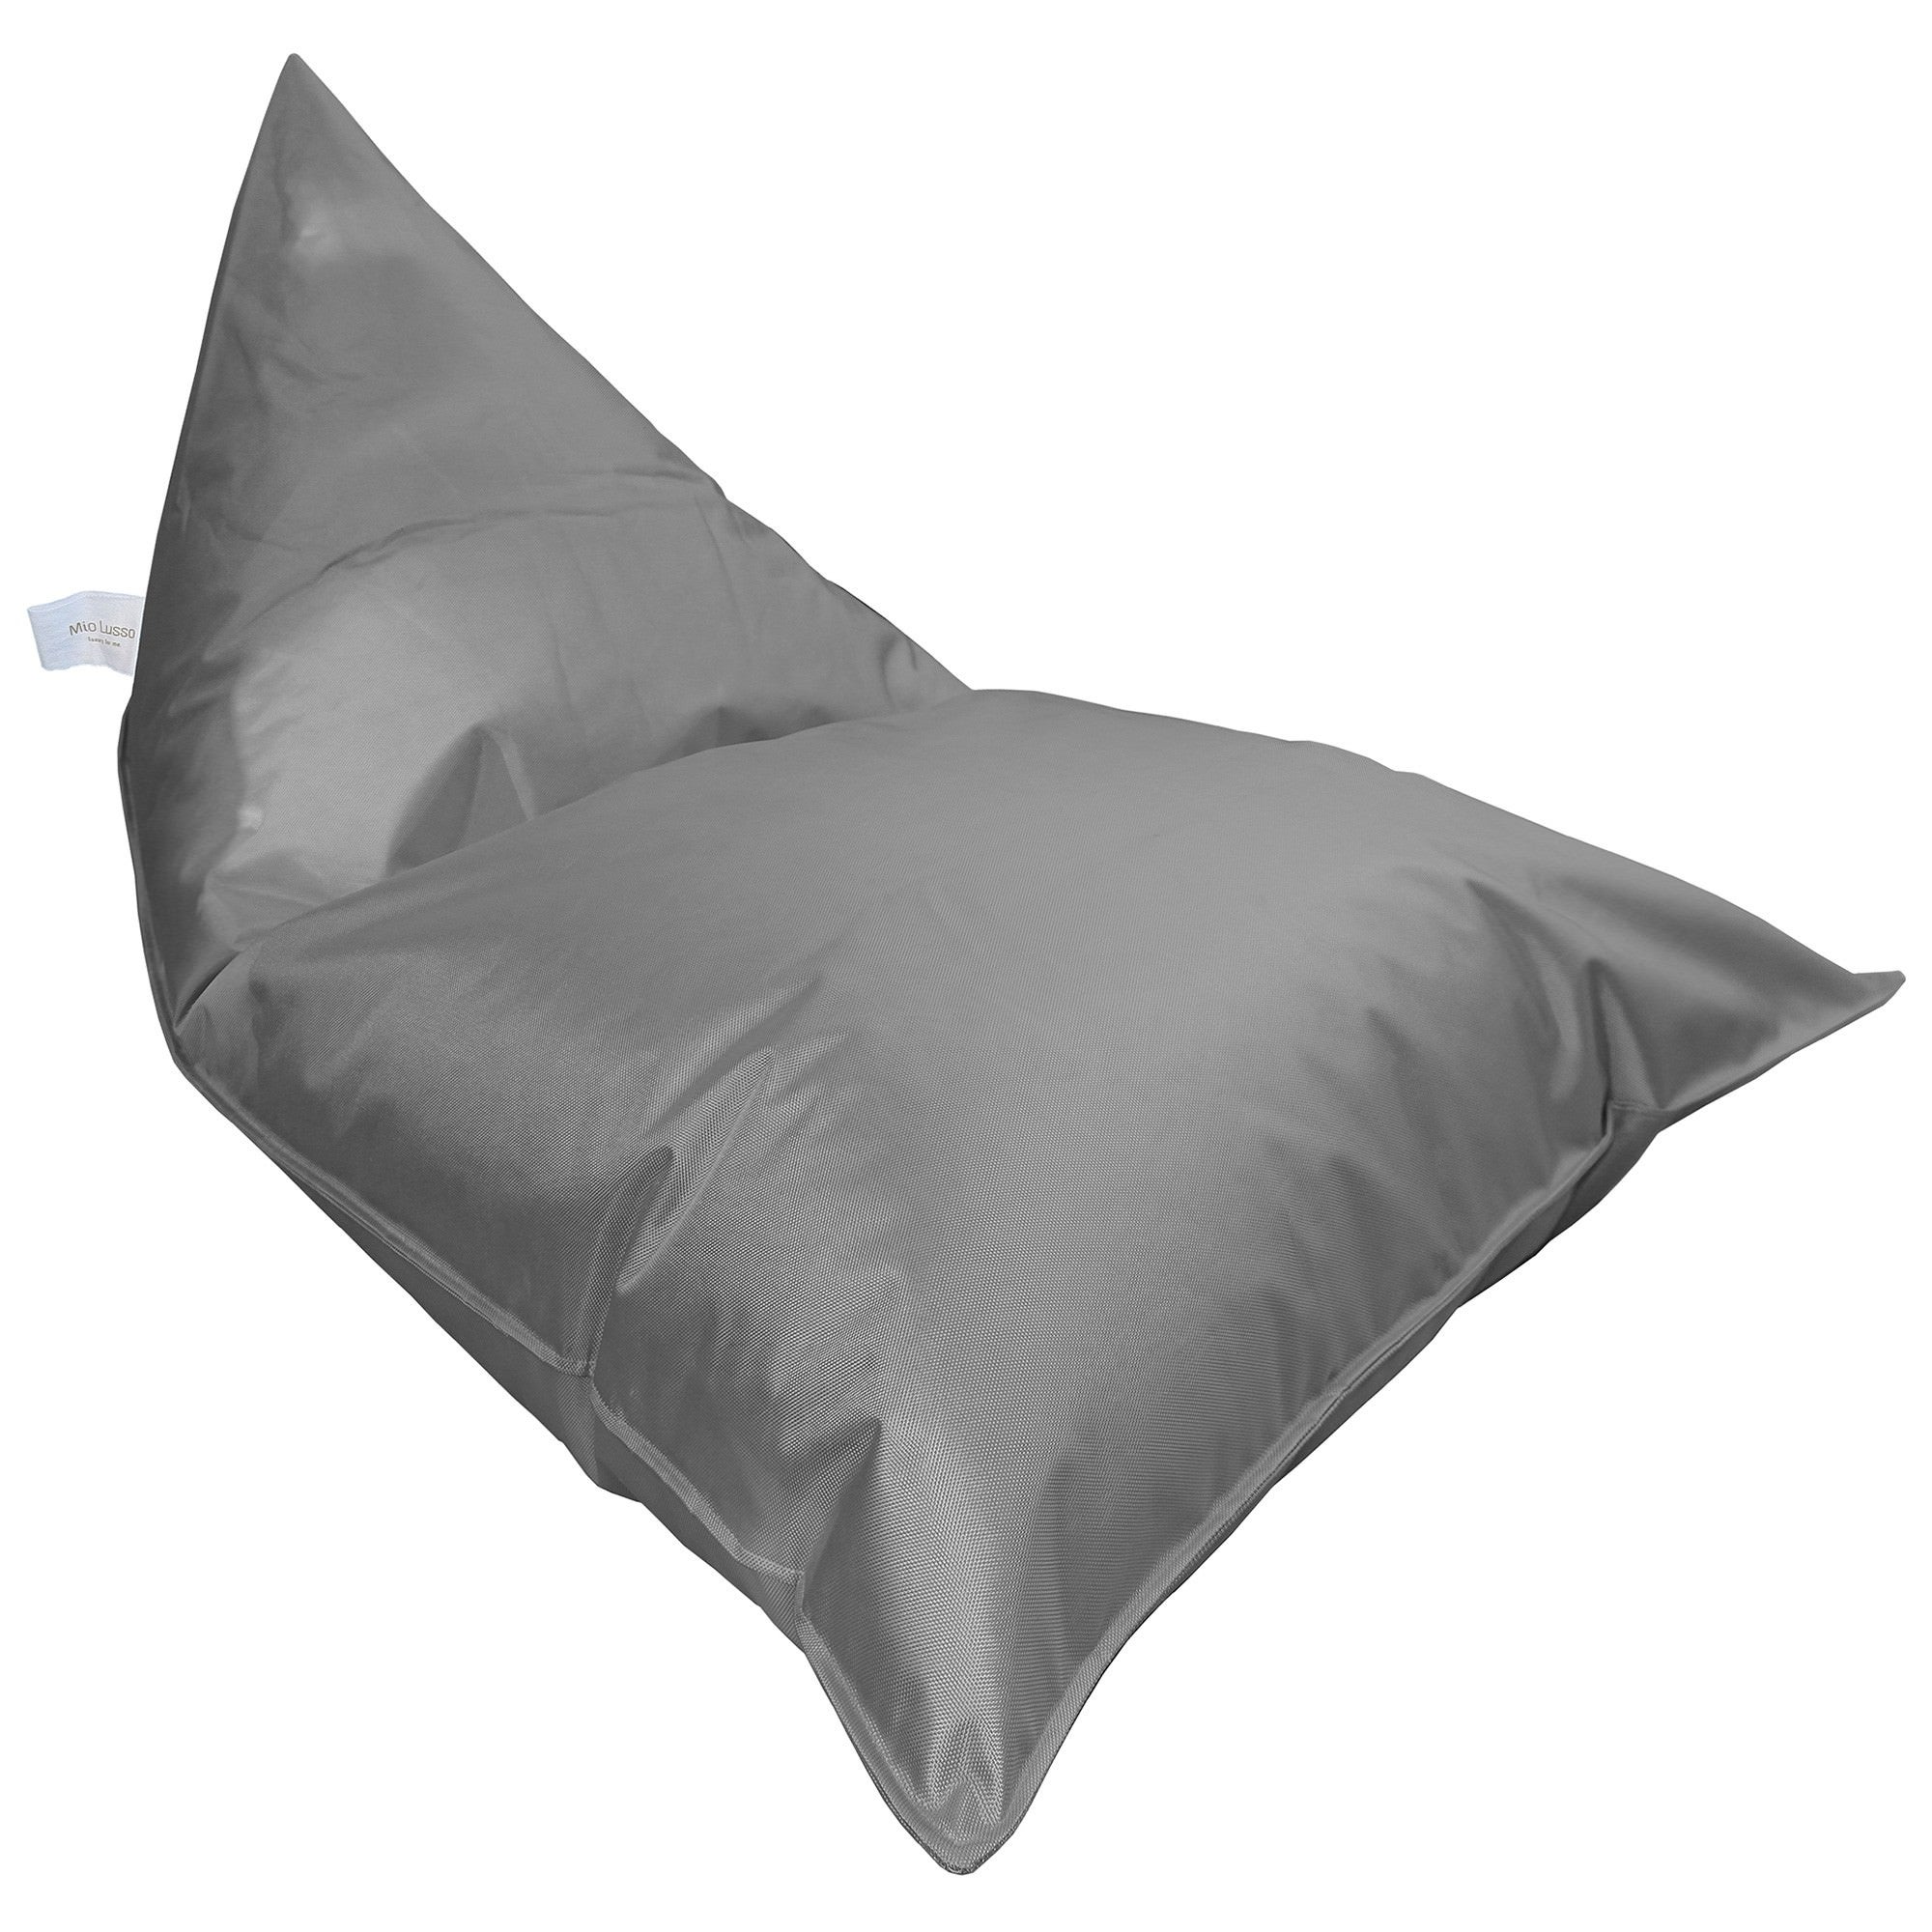 Malibu Fabric Indoor / Outdoor Bean Bag Cover, Silver